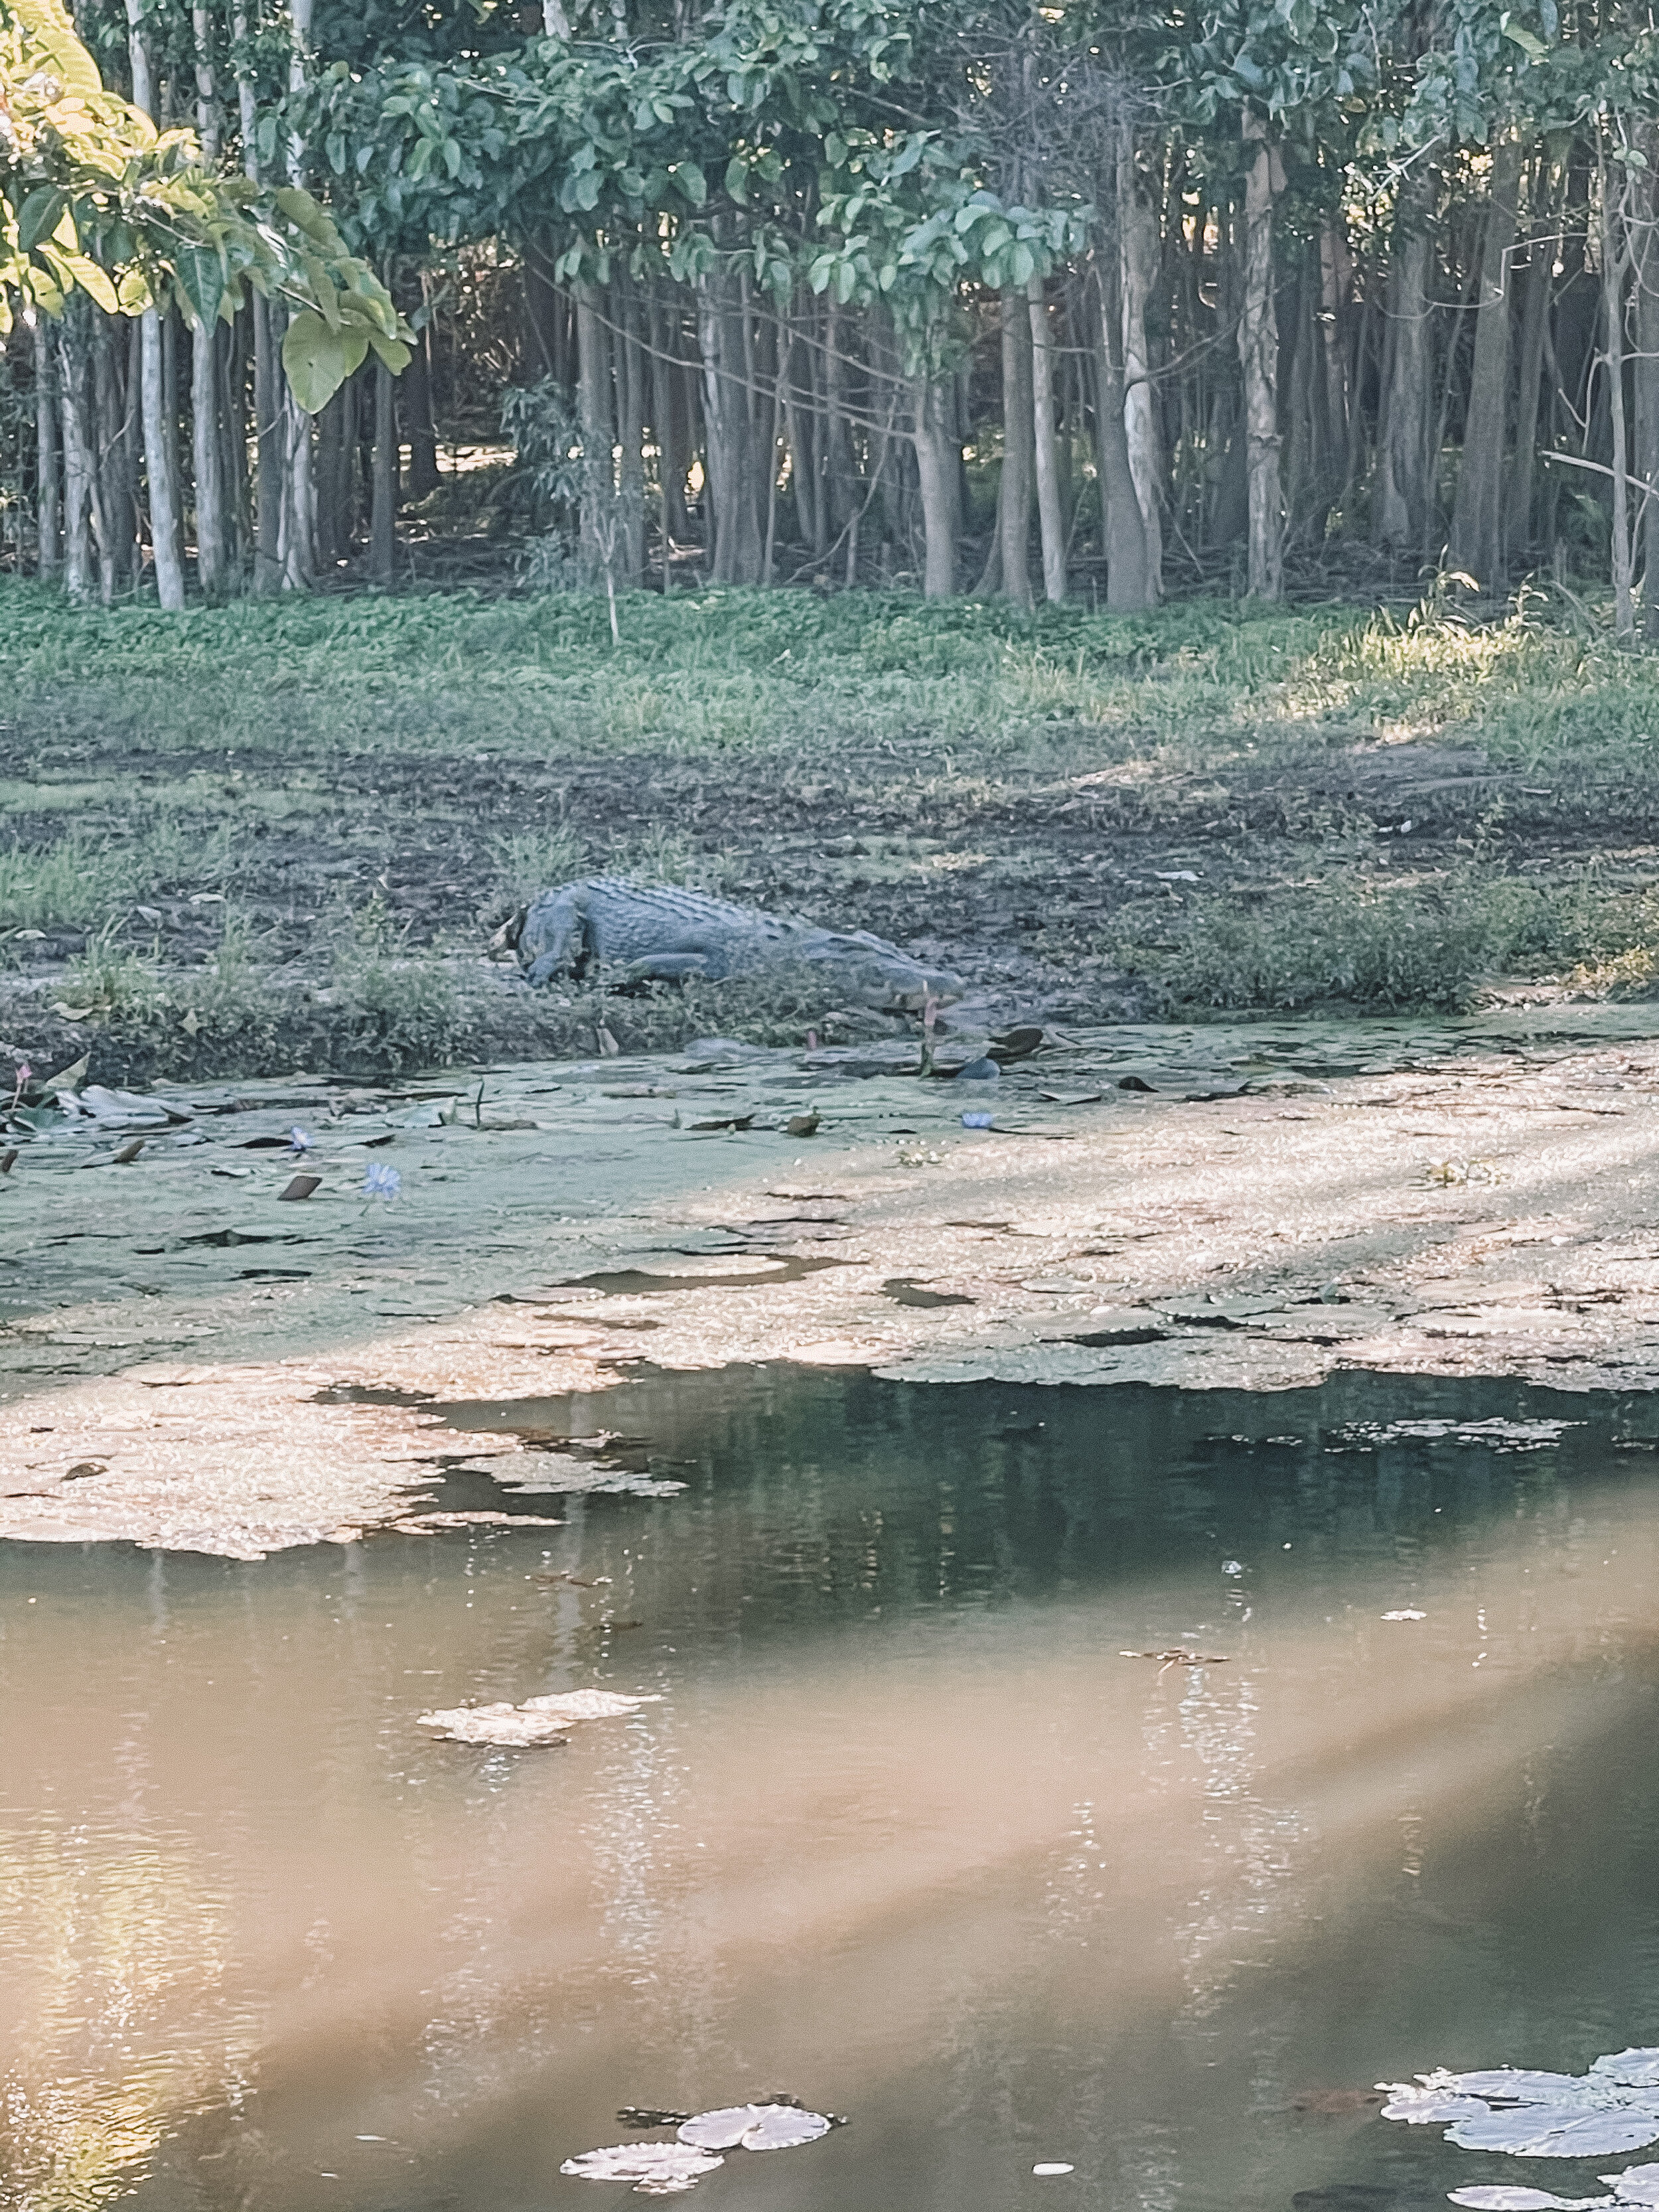 A 17foot long Crocodile near Lucinda - Tropical North Queensland (QLD) - Australia